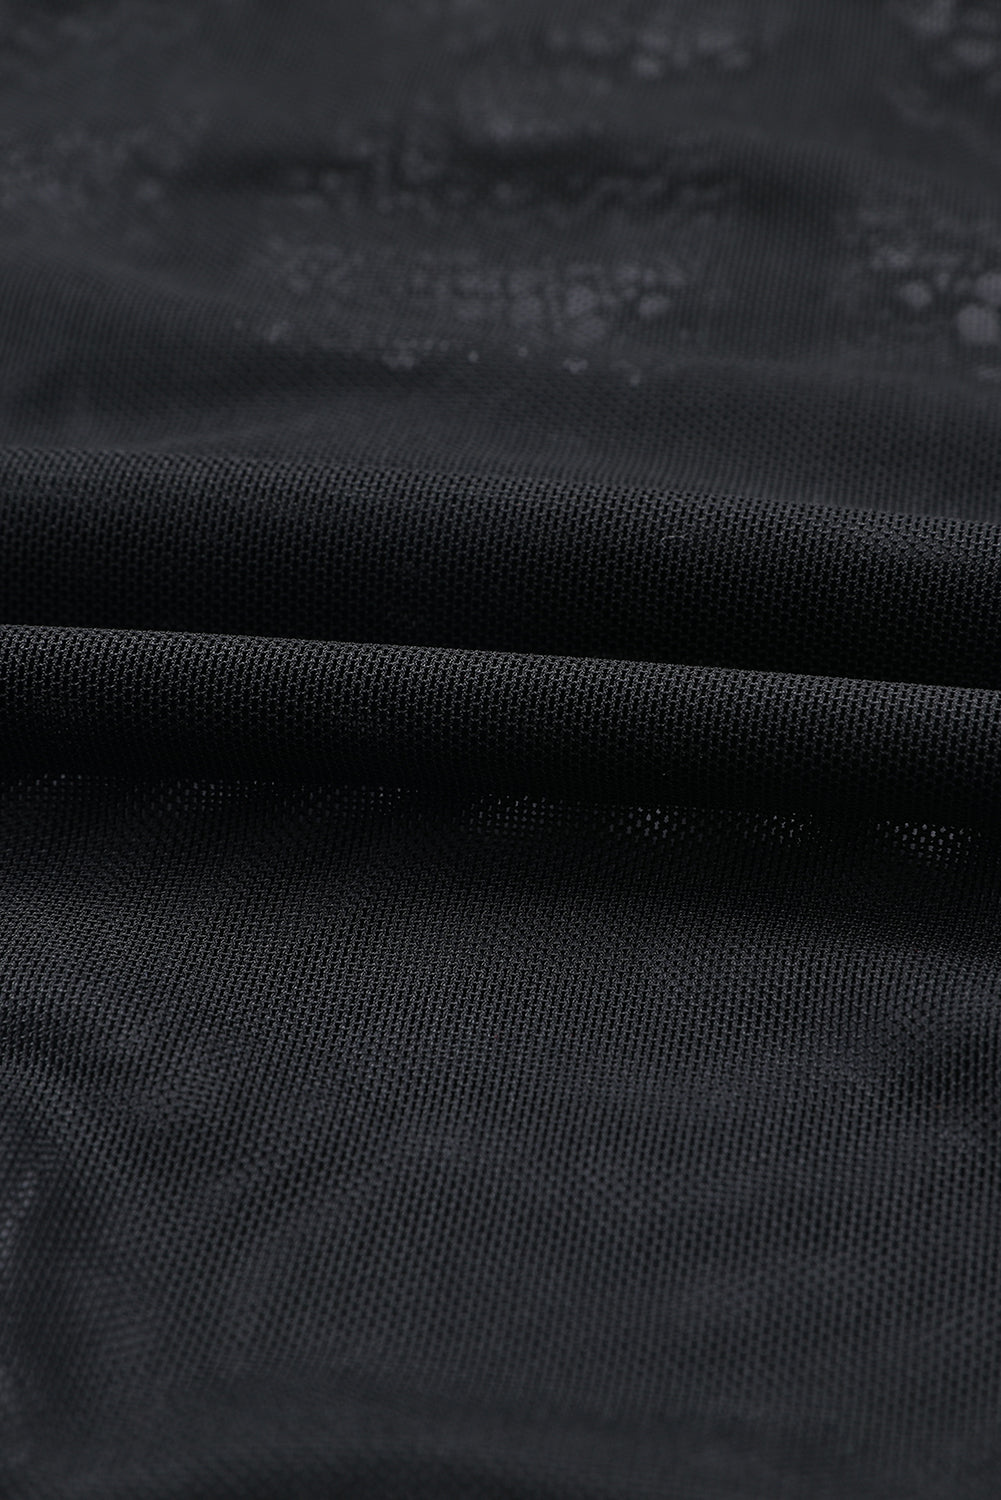 Black Spaghetti Straps Lace Panel Bodysuit - The Lakeside Boutique